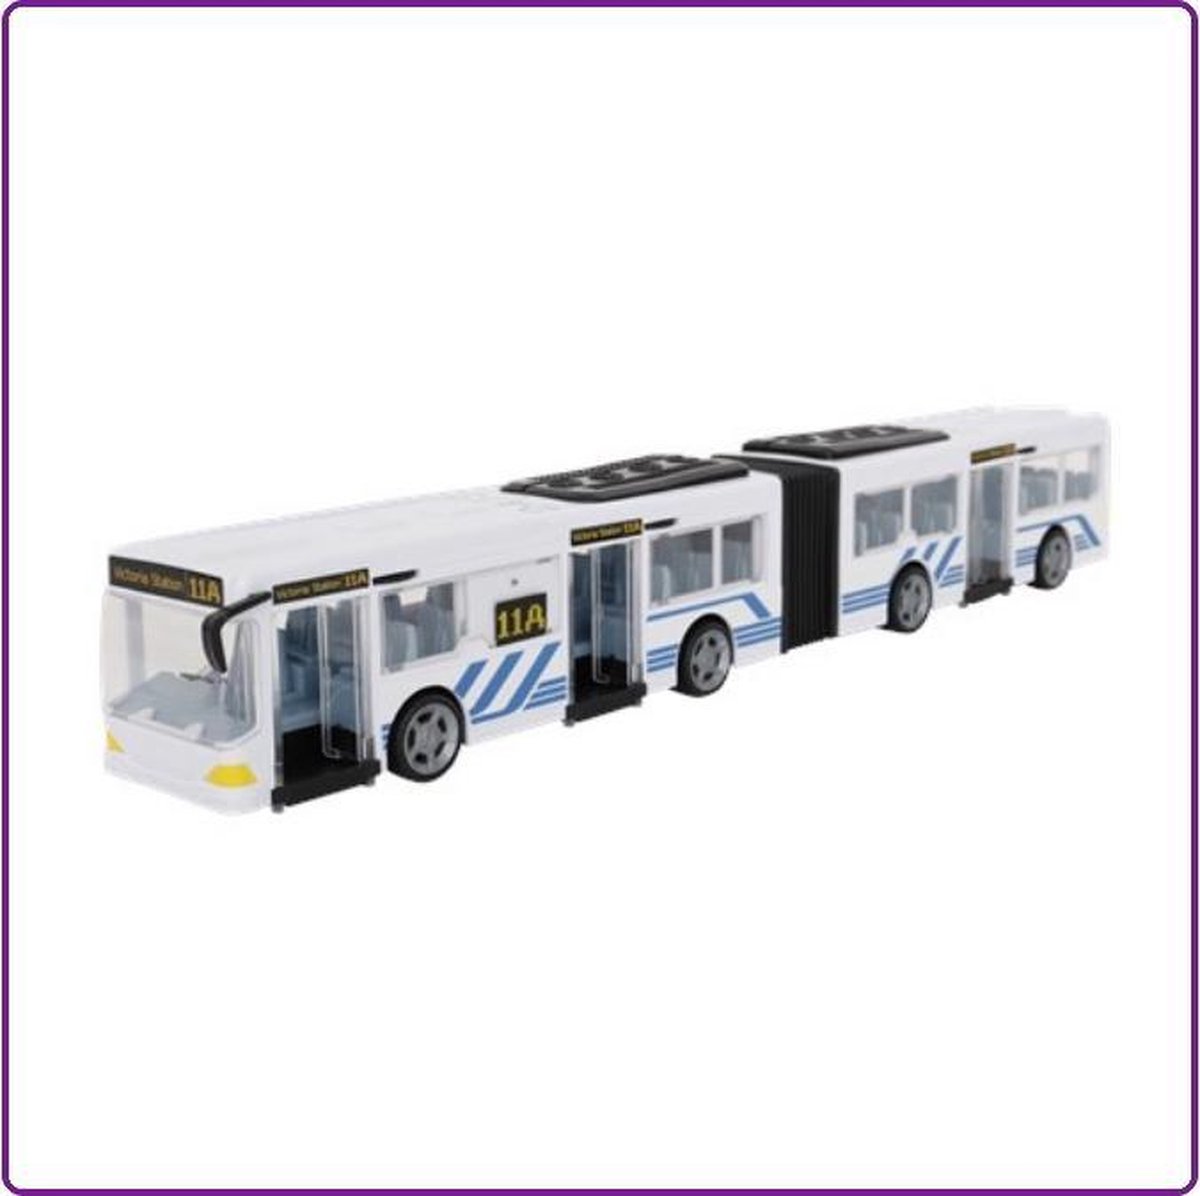 Teamsterz Flexi-bus wit - auto bus speelgoed wagen | bol.com